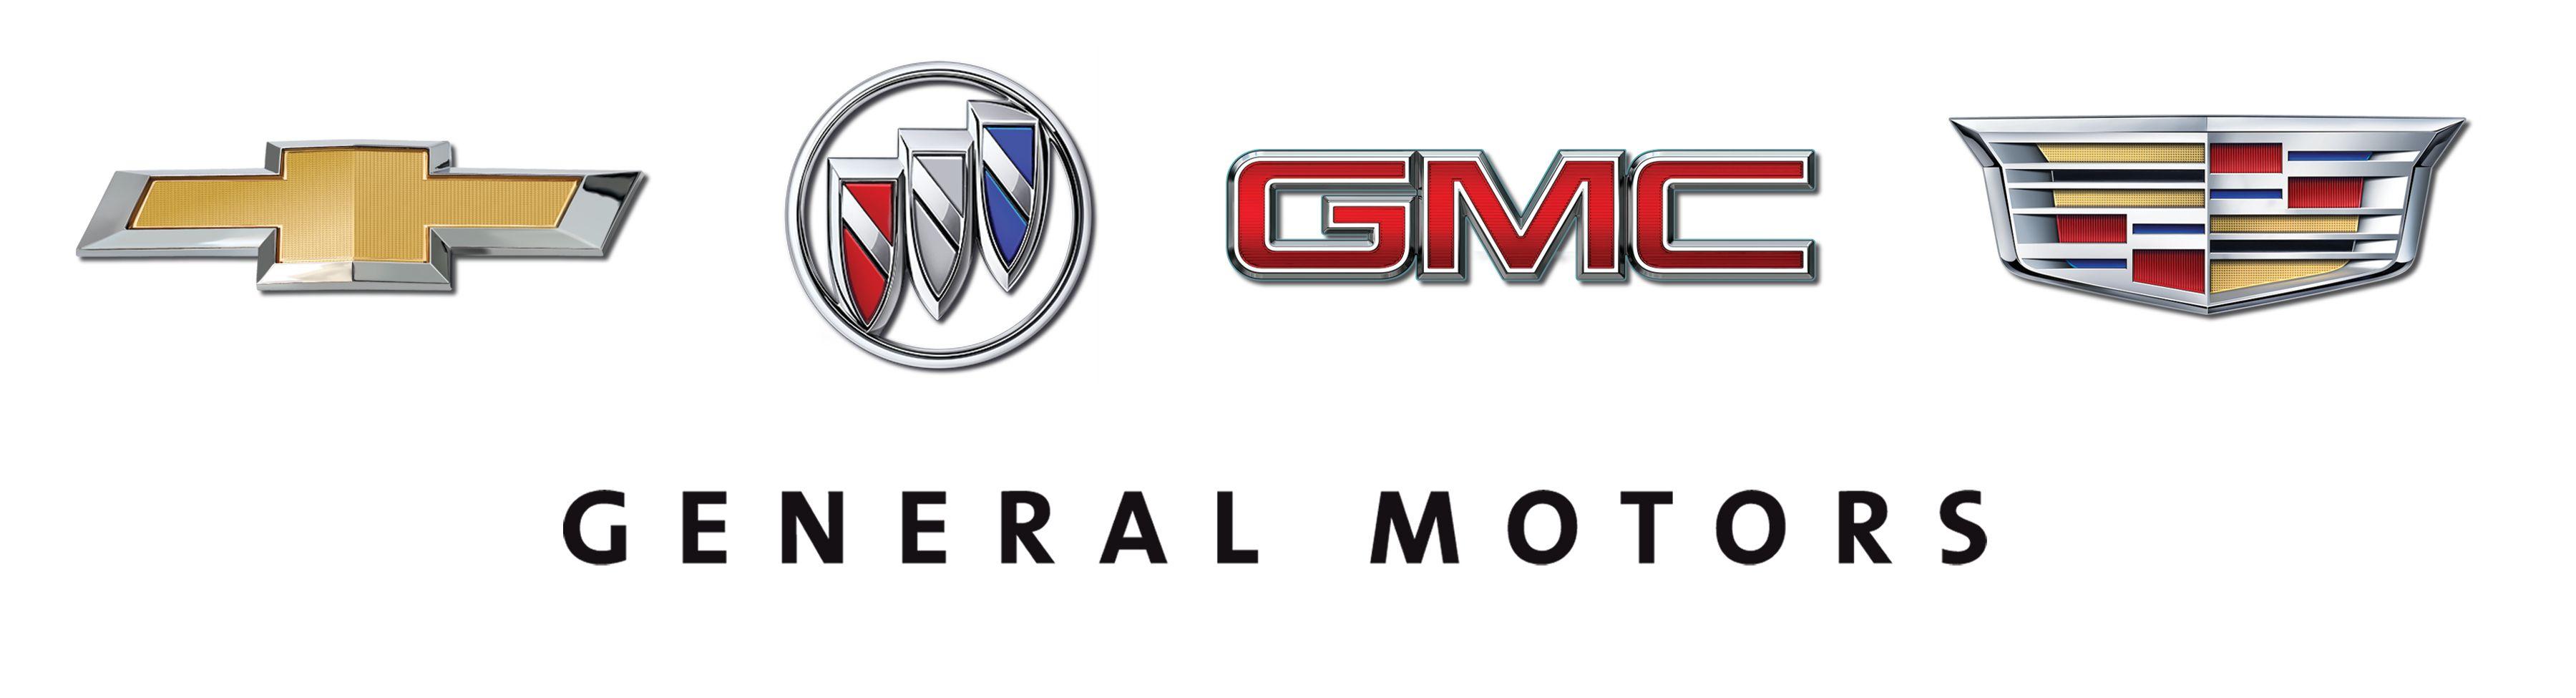 GMC Company Logo - GM Corporate Newsroom - United States - Images